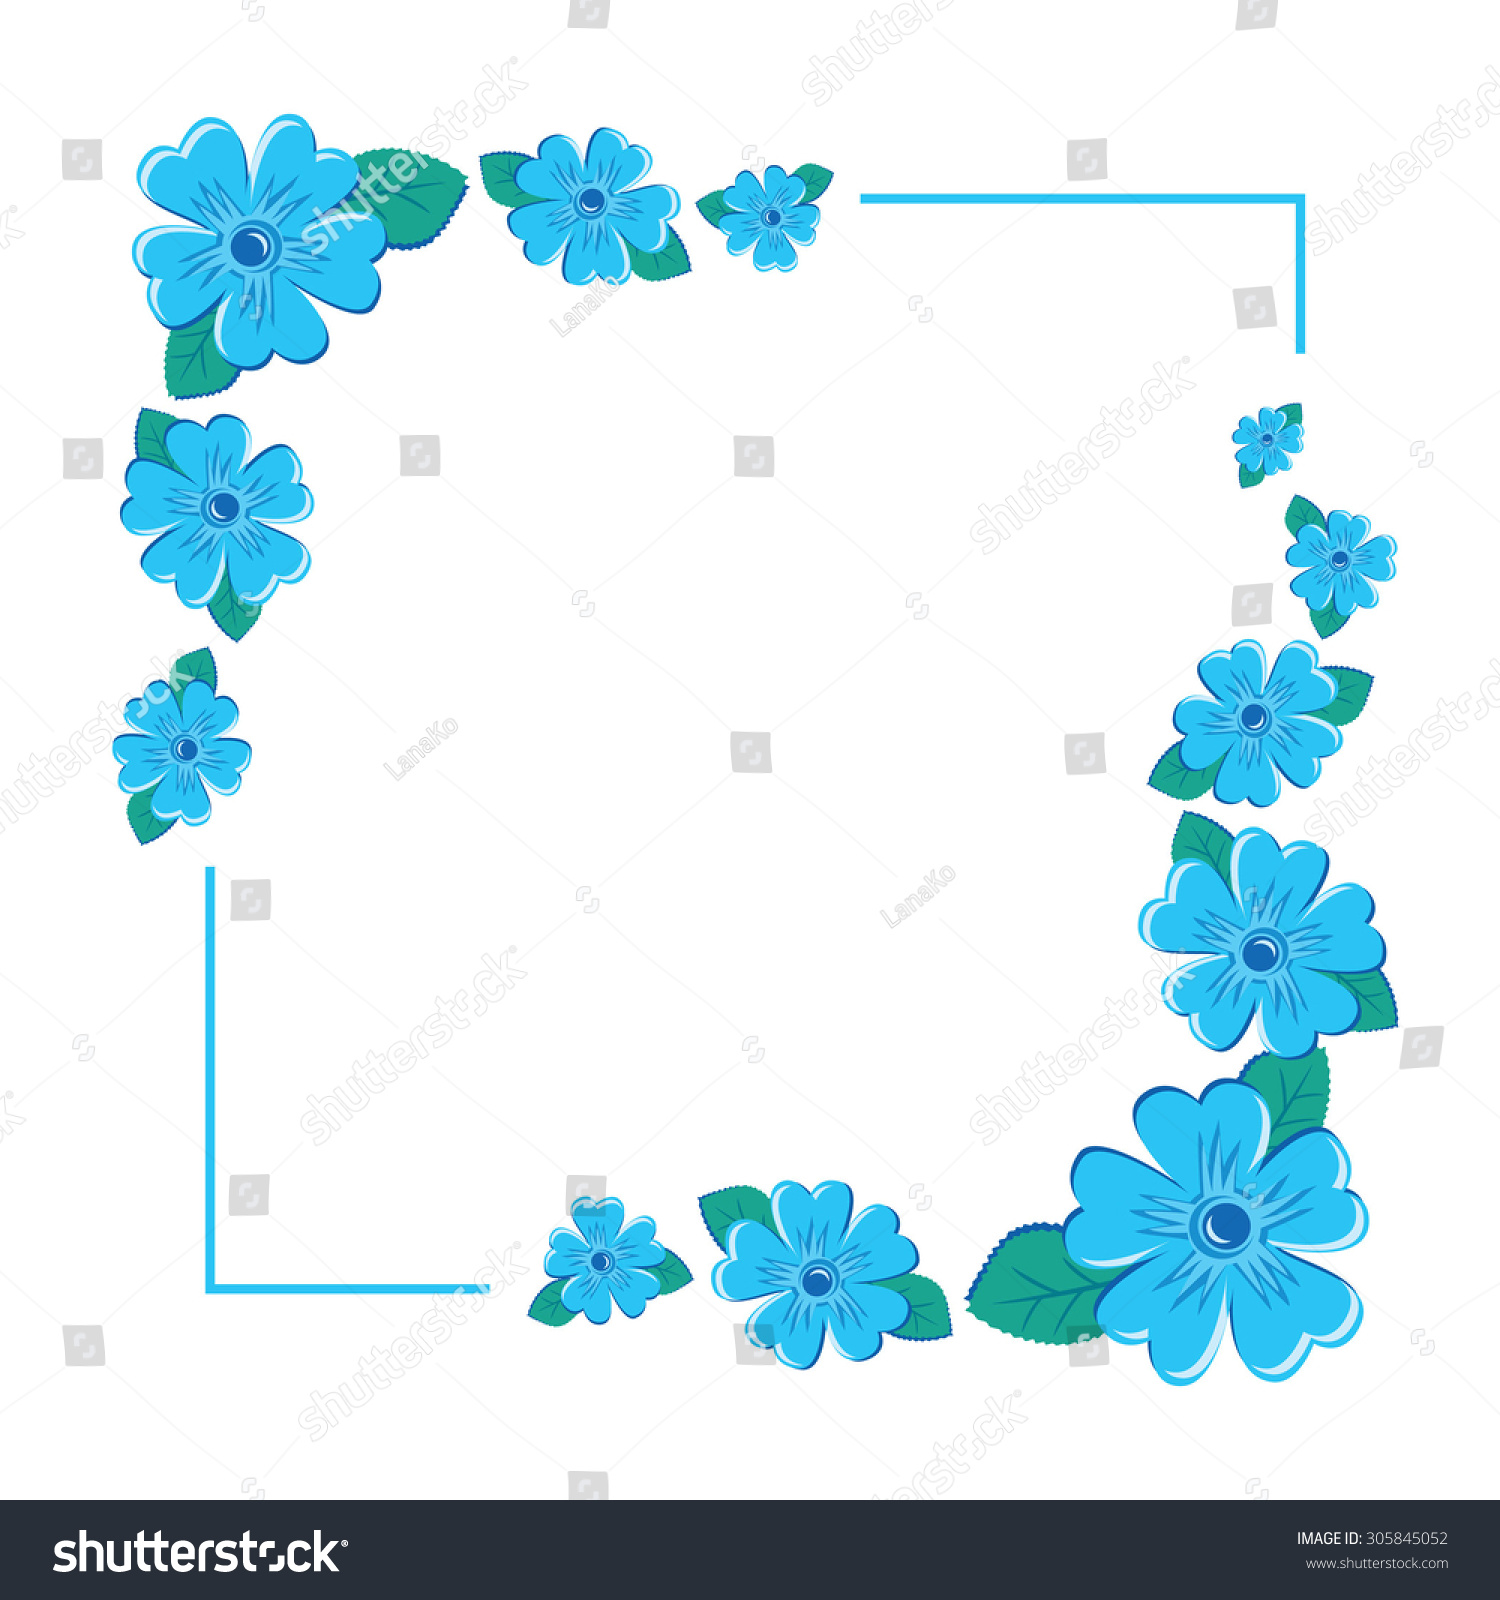 Blue Flower Frame เวกเตอร์สต็อก (ปลอดค่าลิขสิทธิ์) 305845052 - Shutterstock